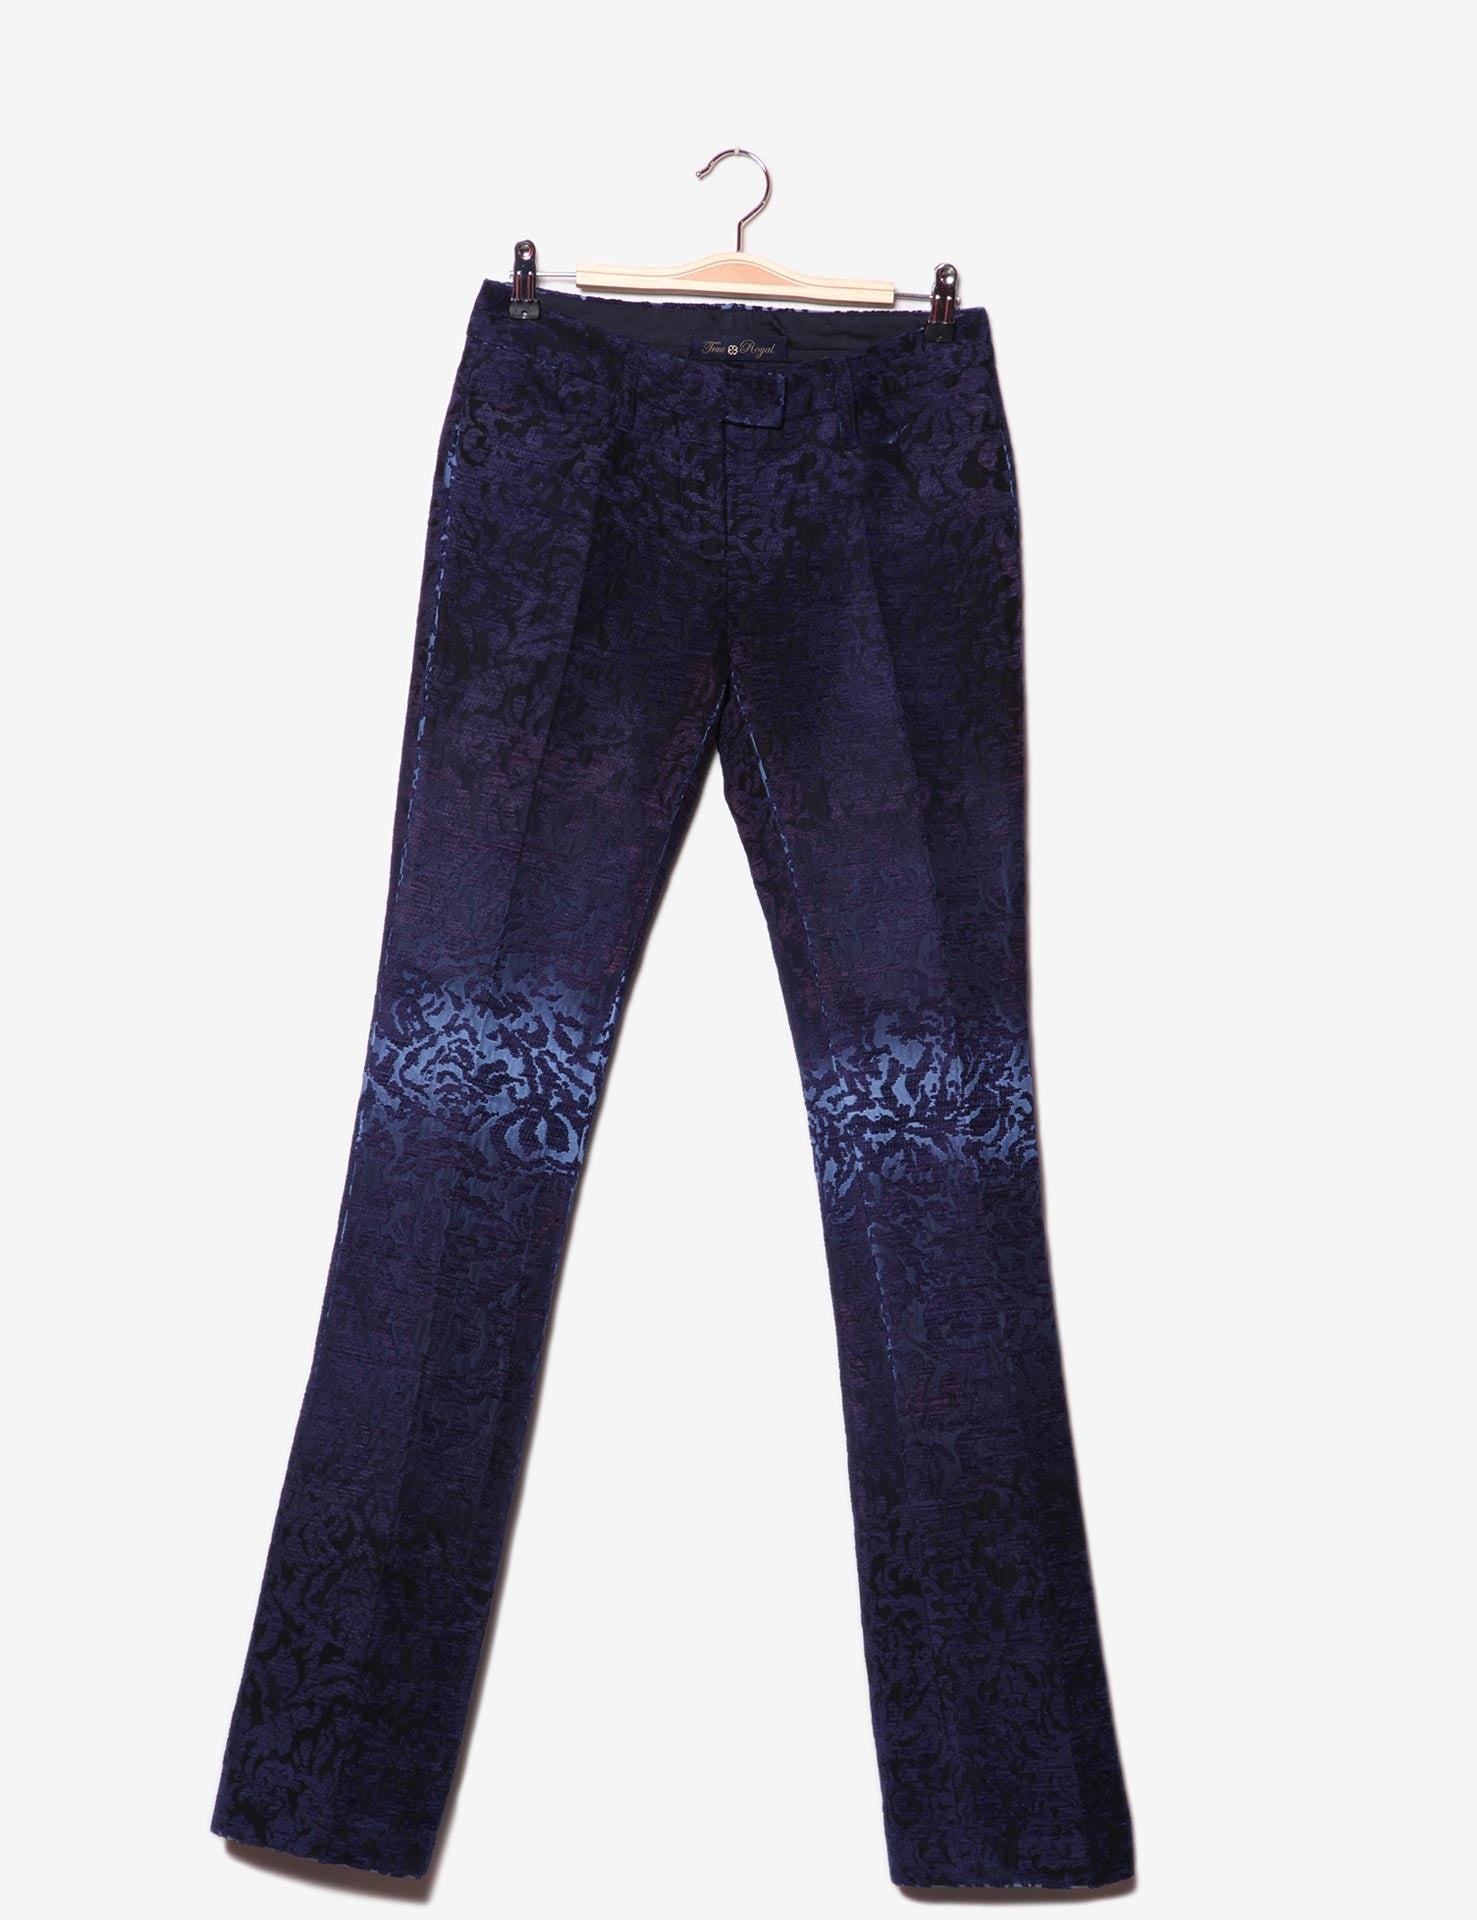 Pantalone con inserti in velluto W27-Vintage-frontale.jpg